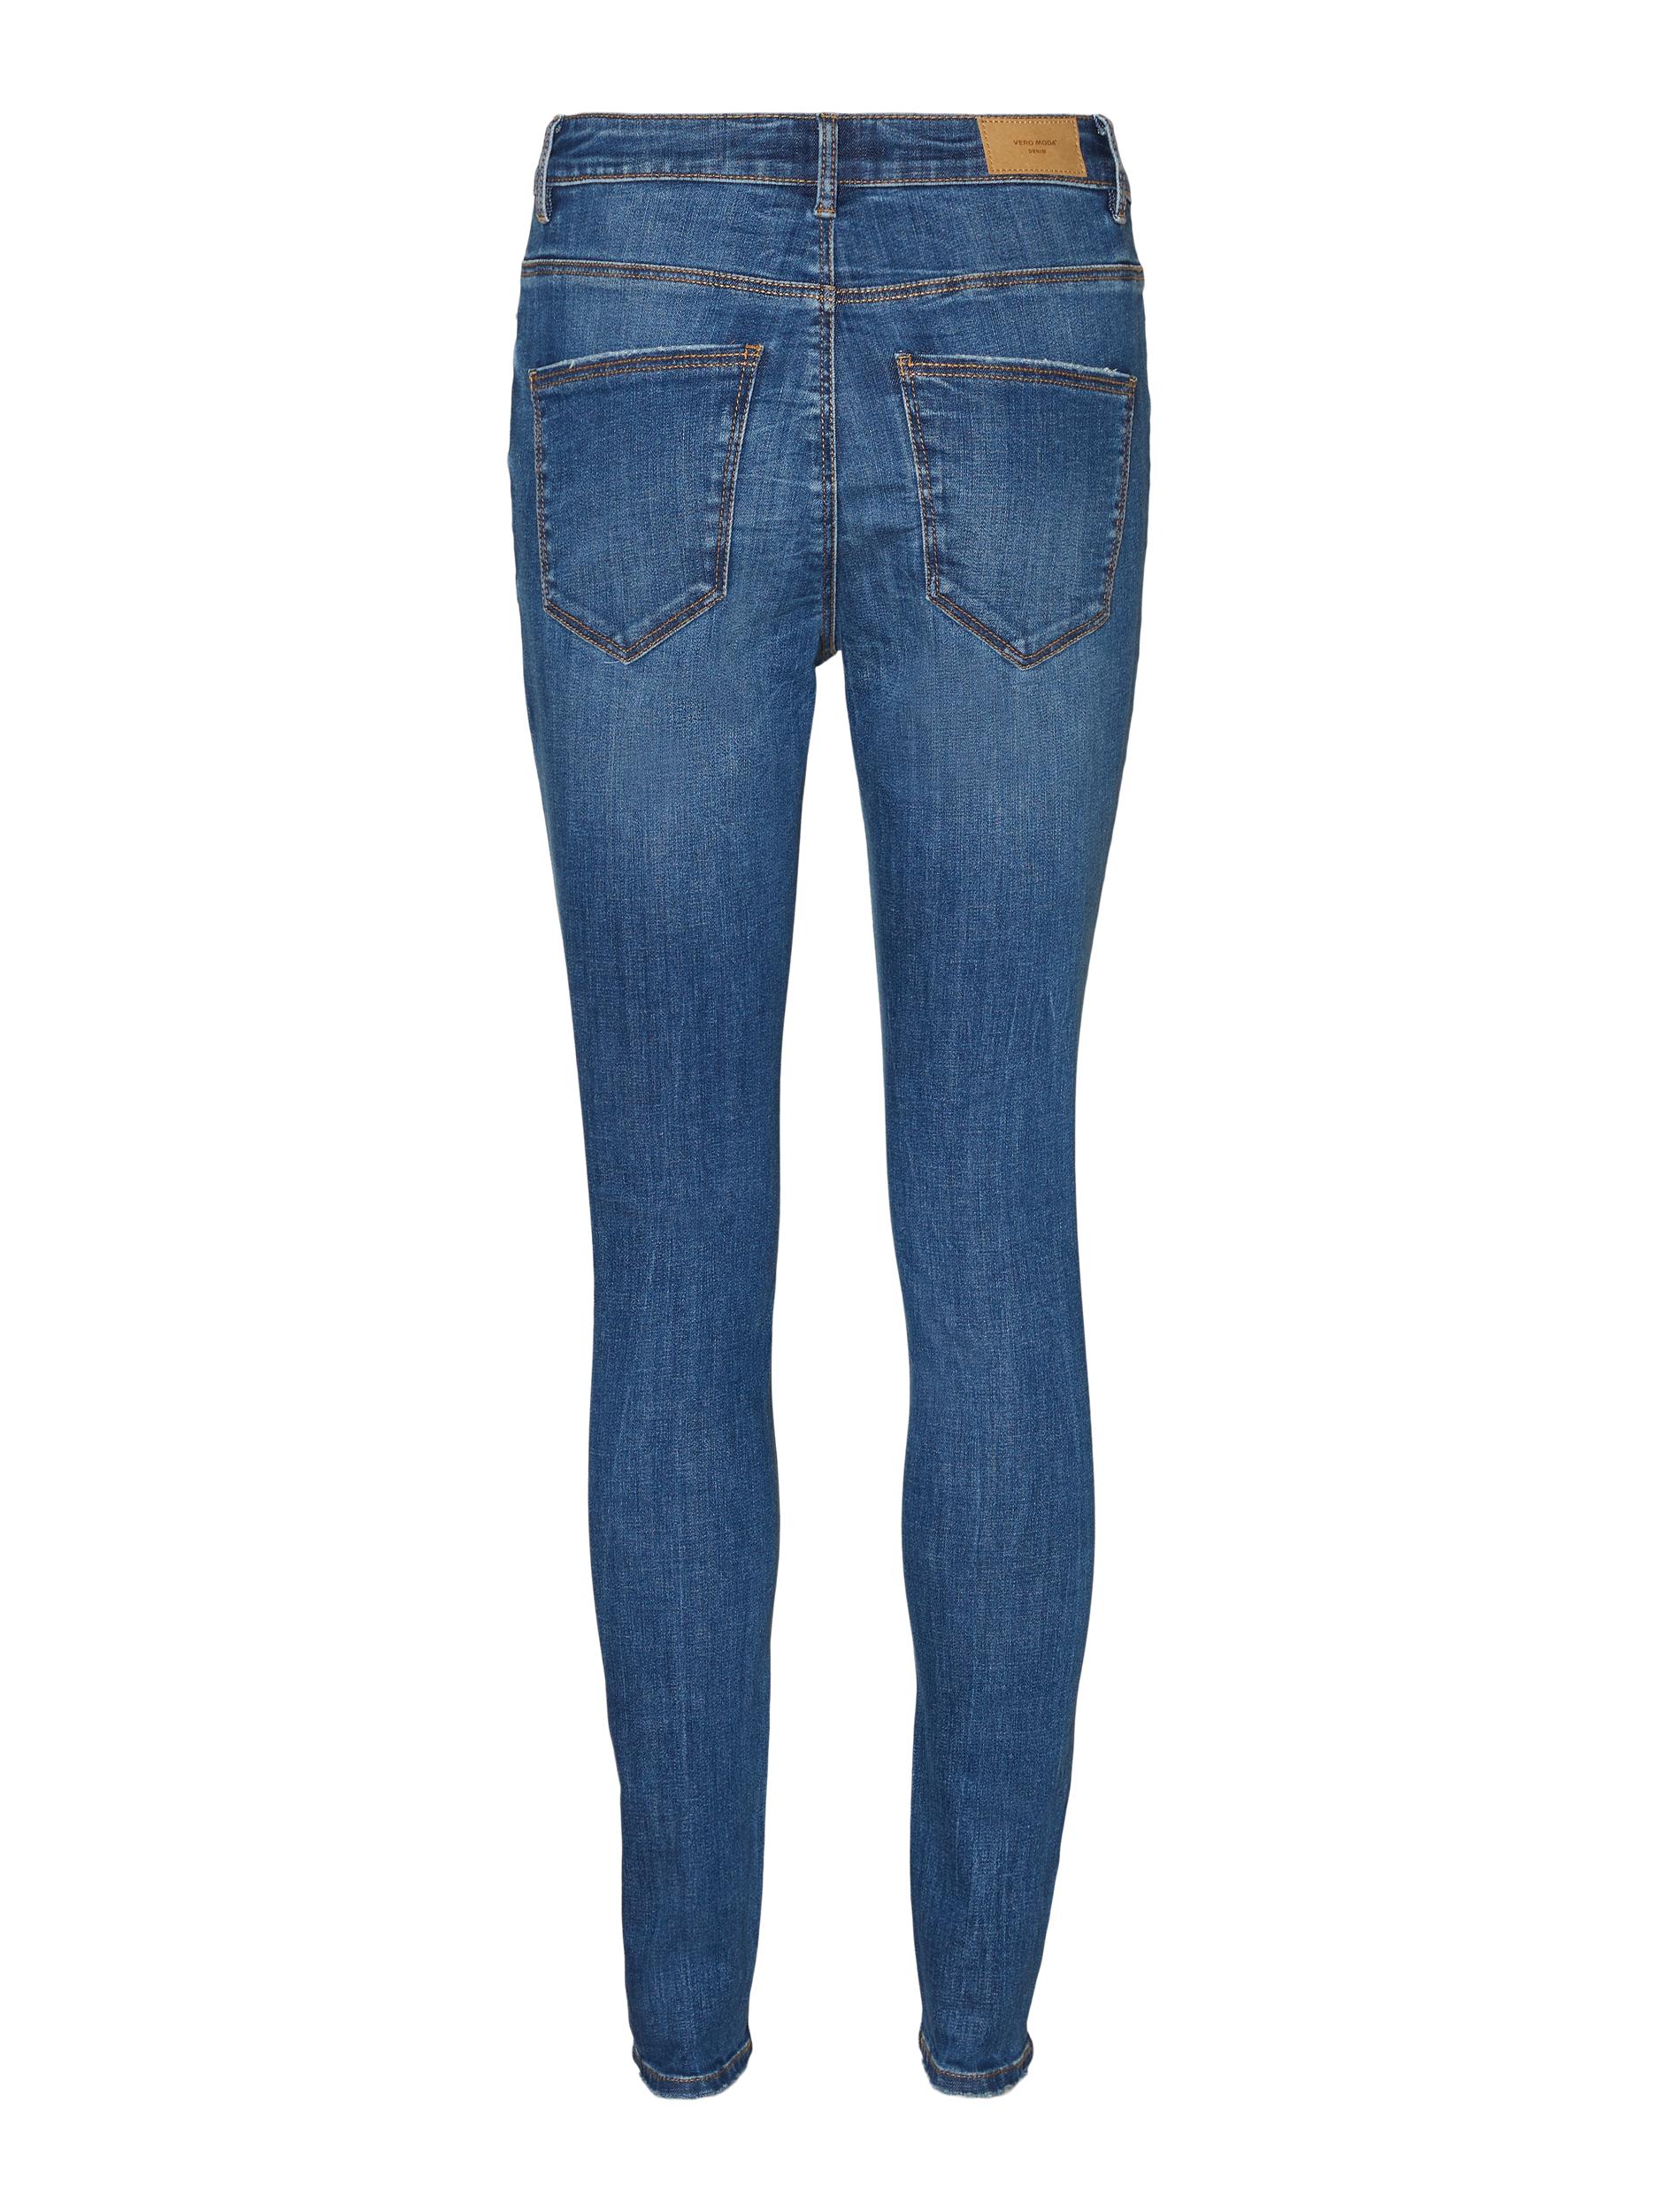 Sophia high waist skinny fit jeans, MEDIUM BLUE DENIM, large